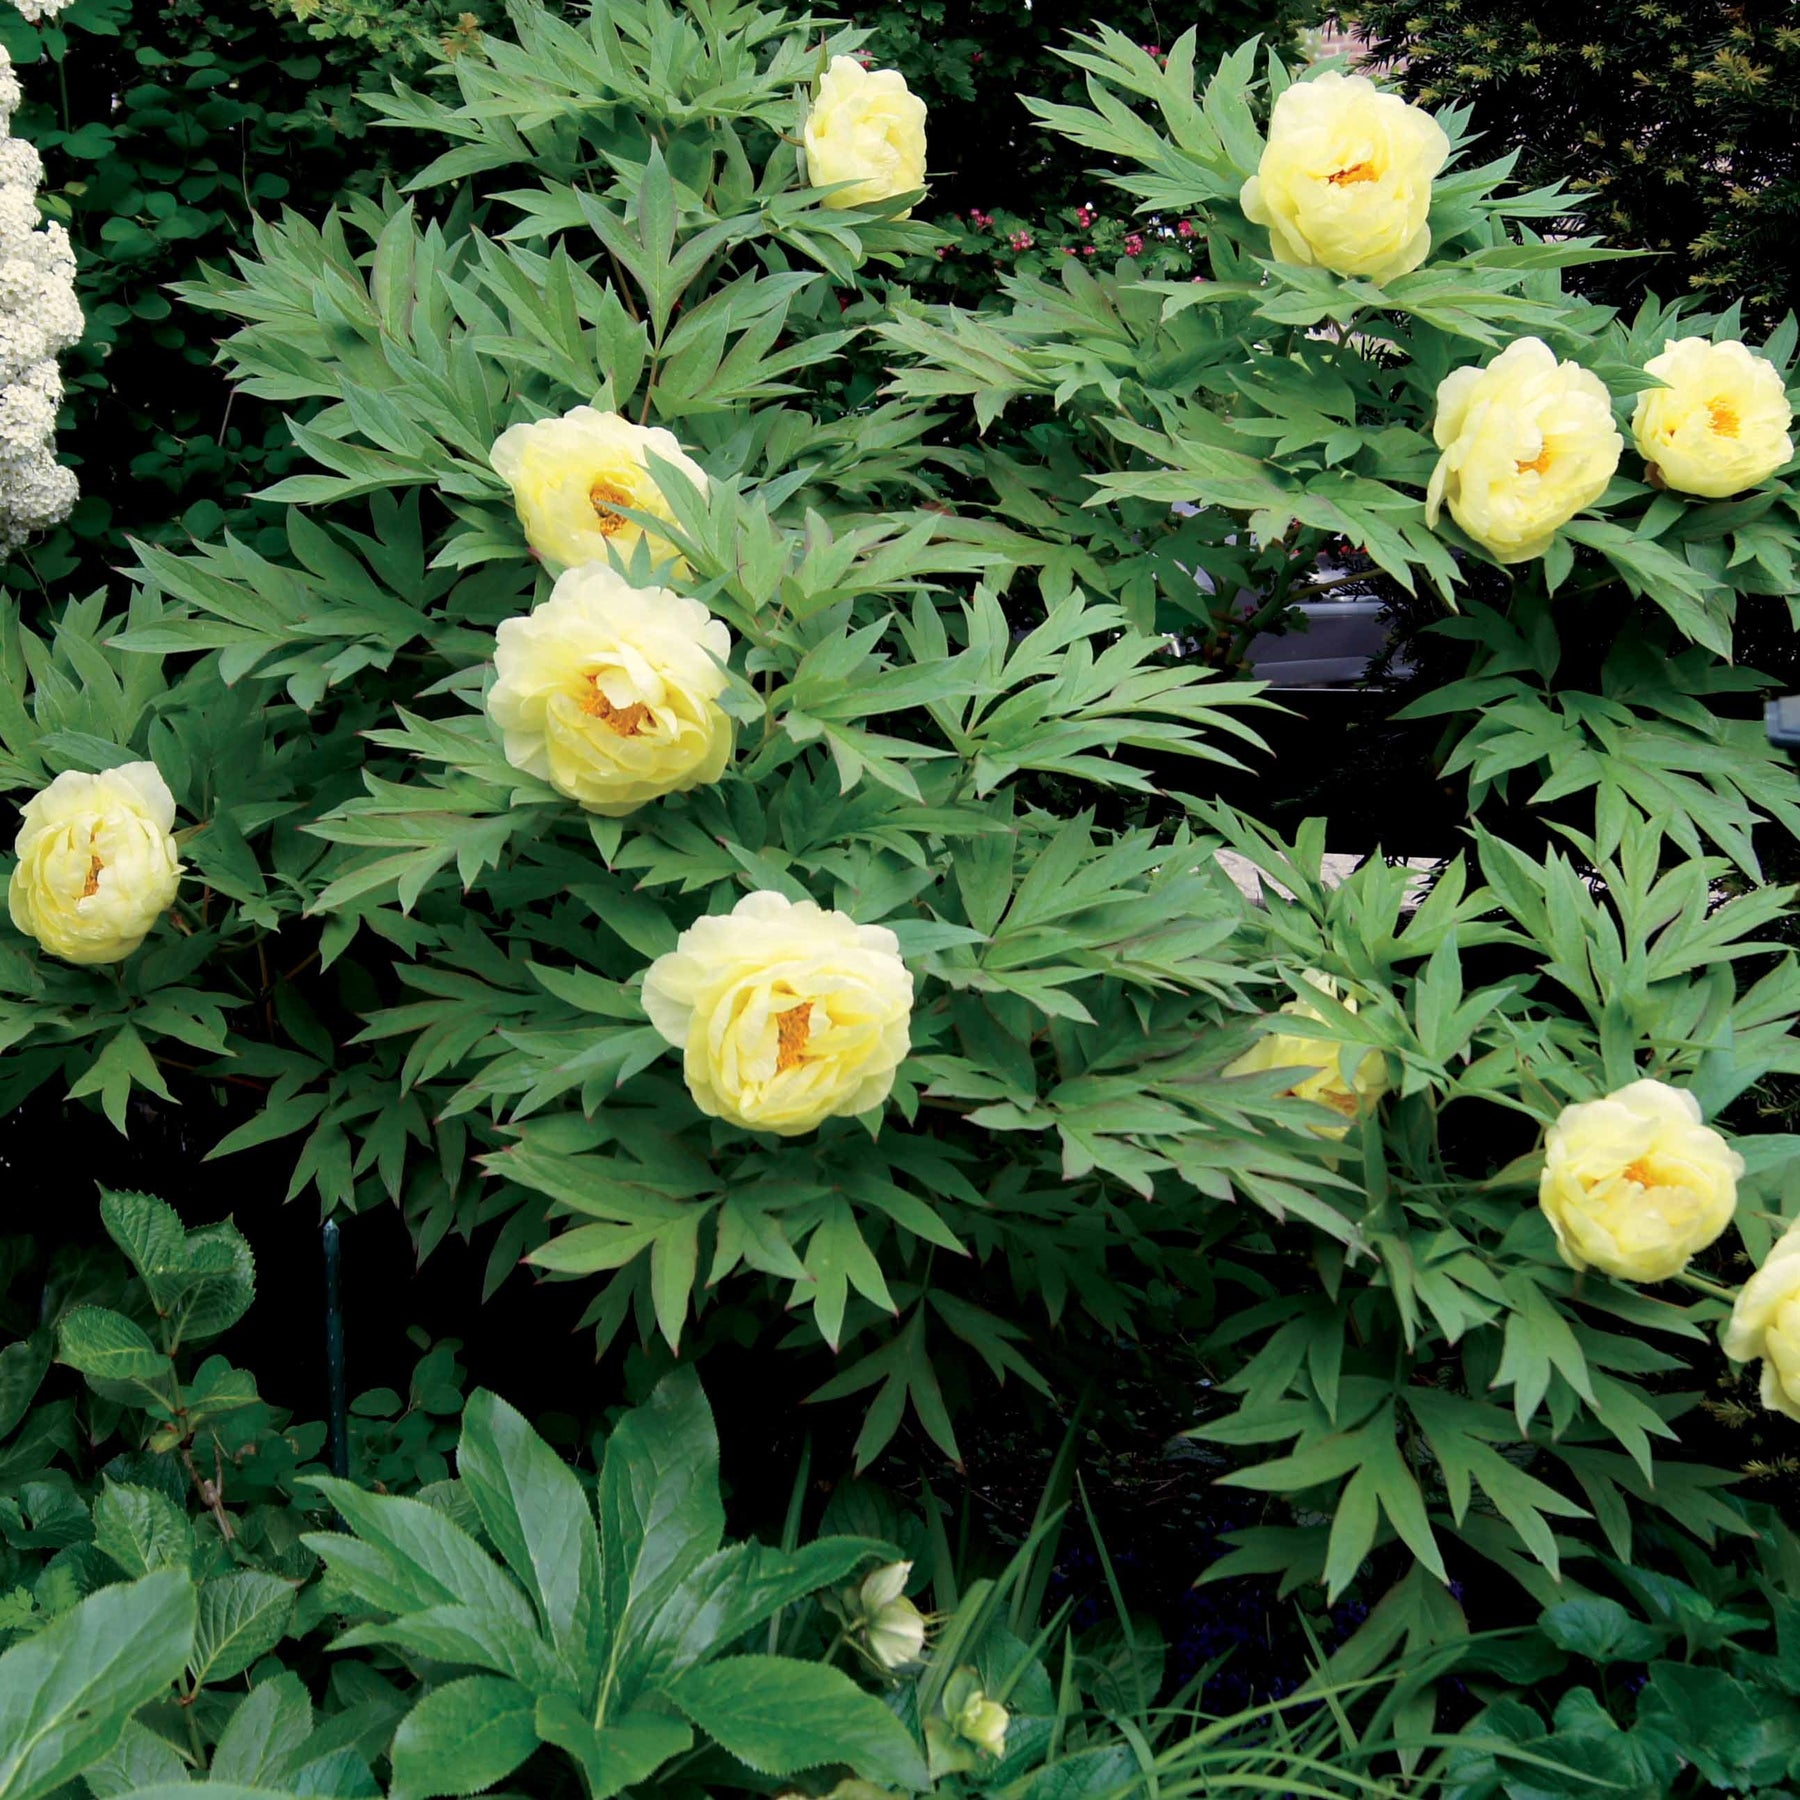 Collection de 4 plantes vivaces aux couleurs tendres - Paeonia itoh bartzella, delphinium bolero, gaura lindheimeri - Collections de vivaces